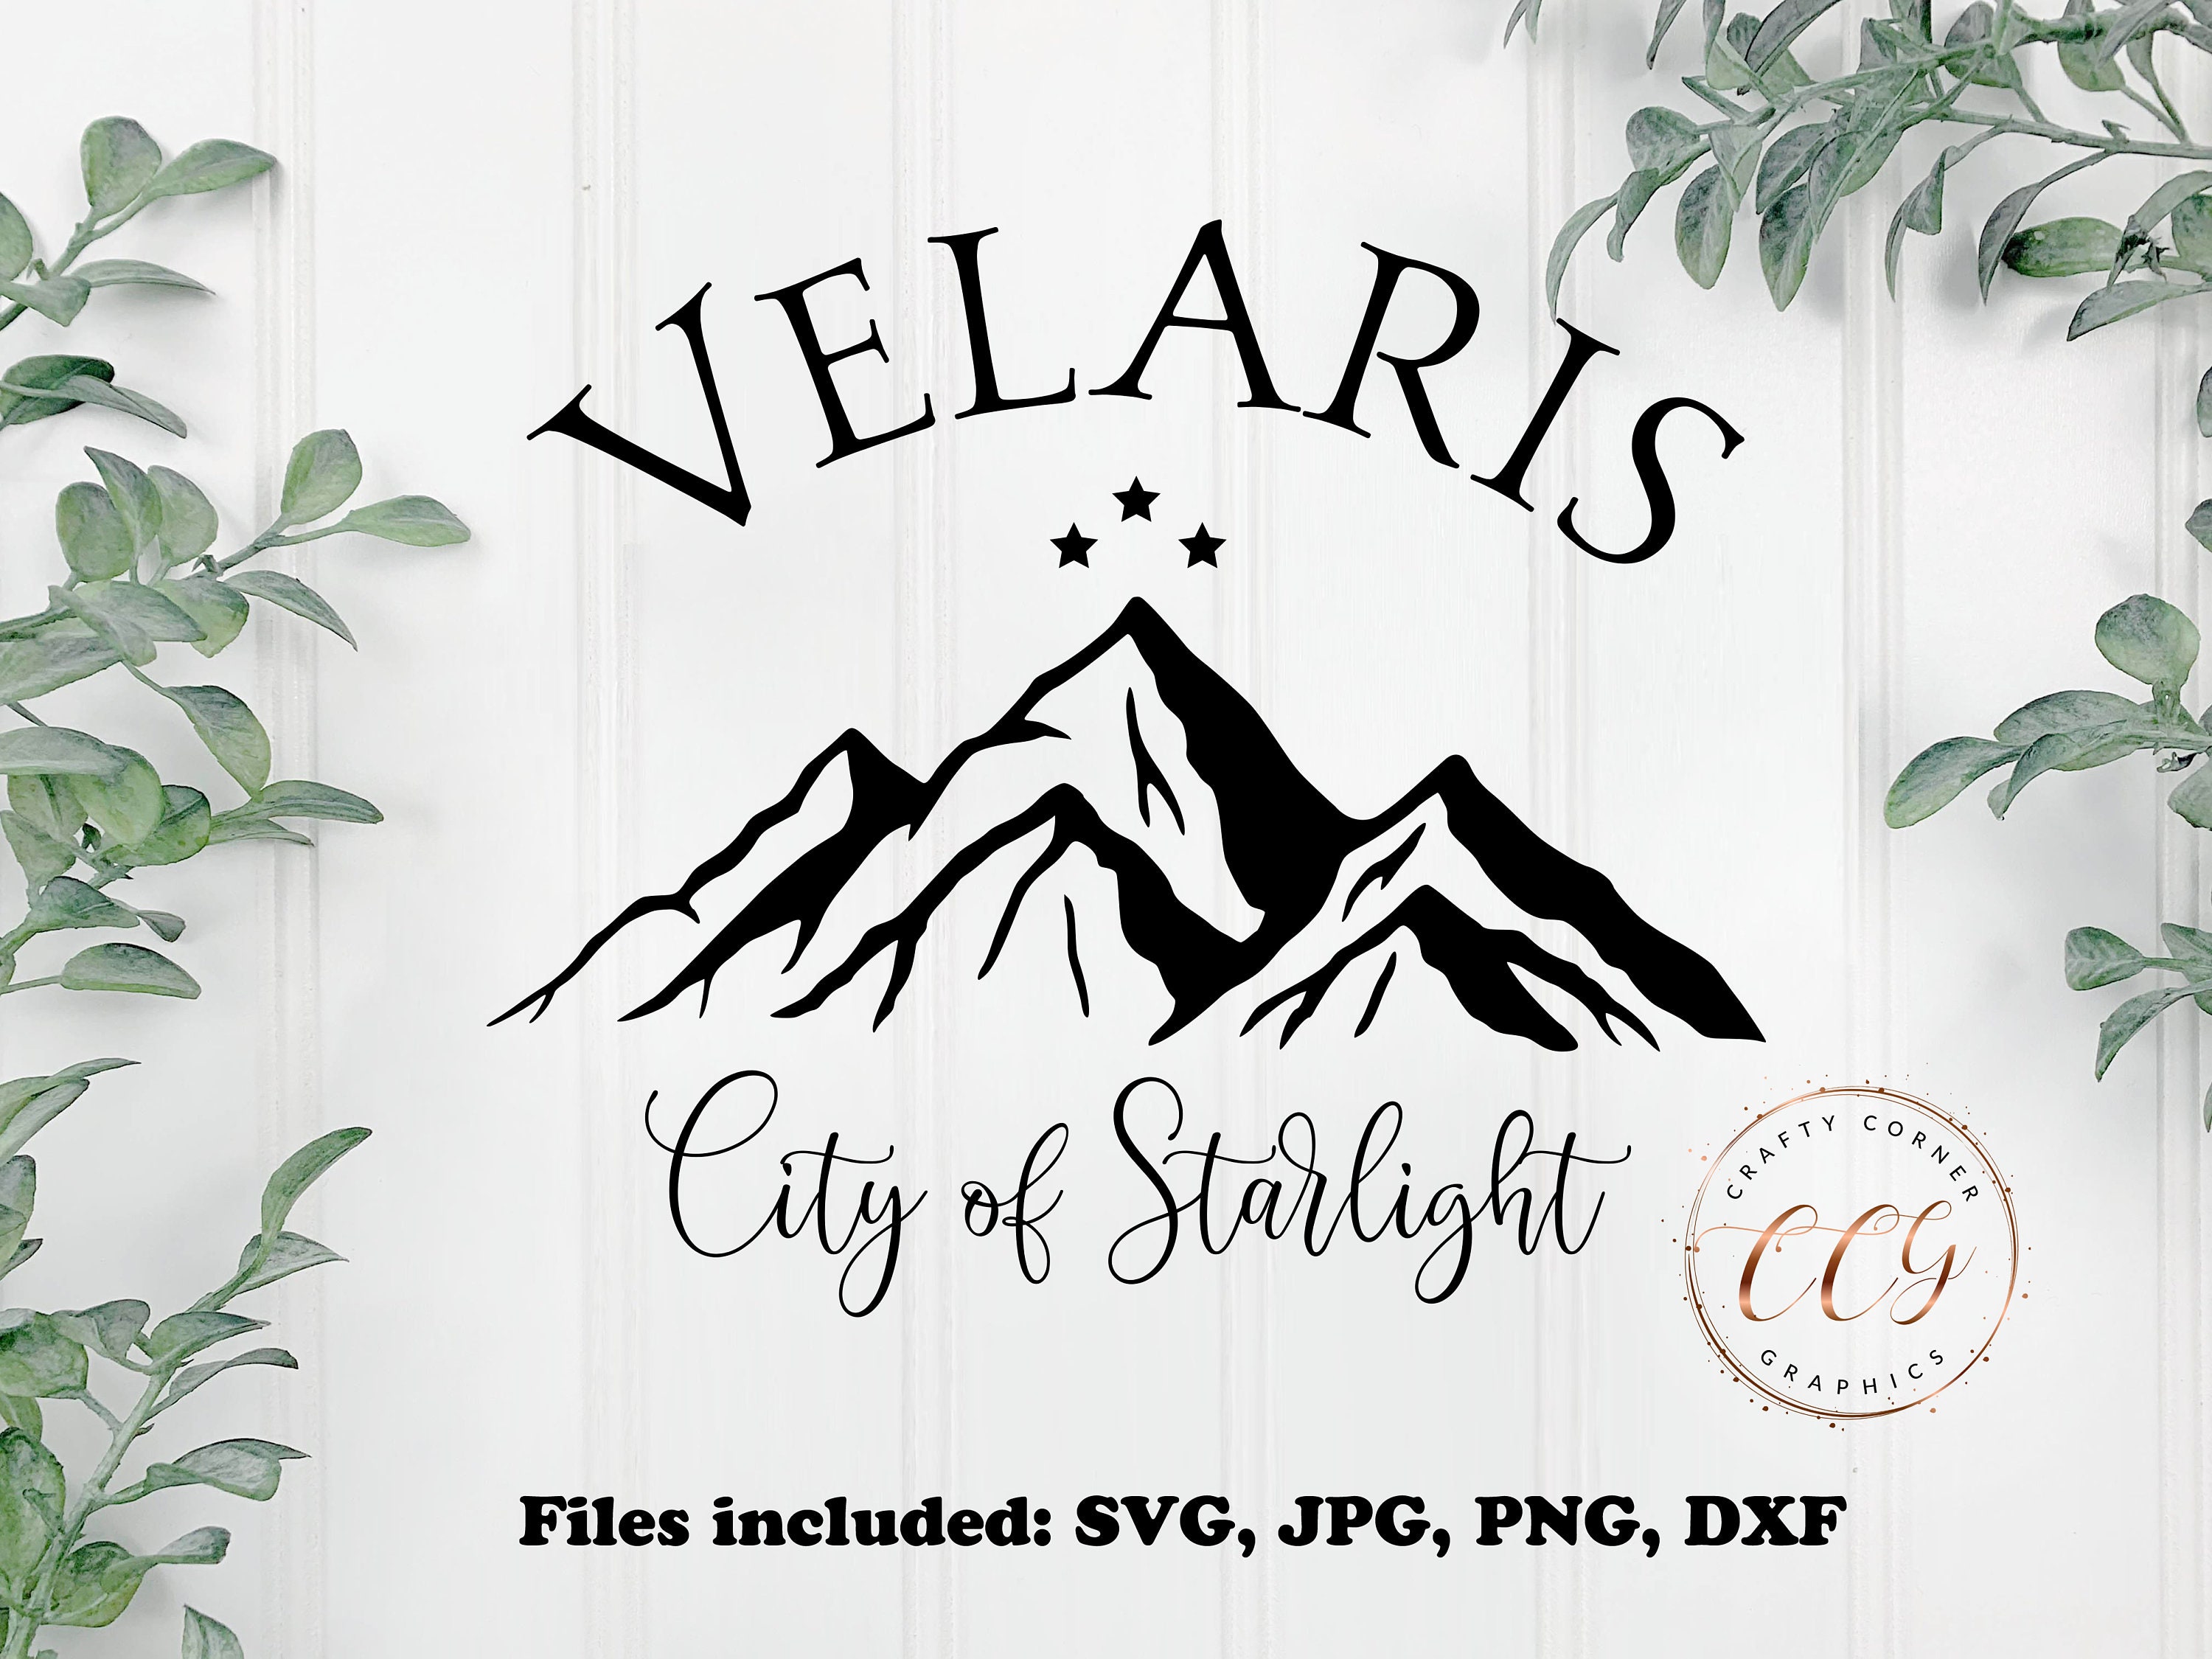 velaris stamp sticker – probably smut